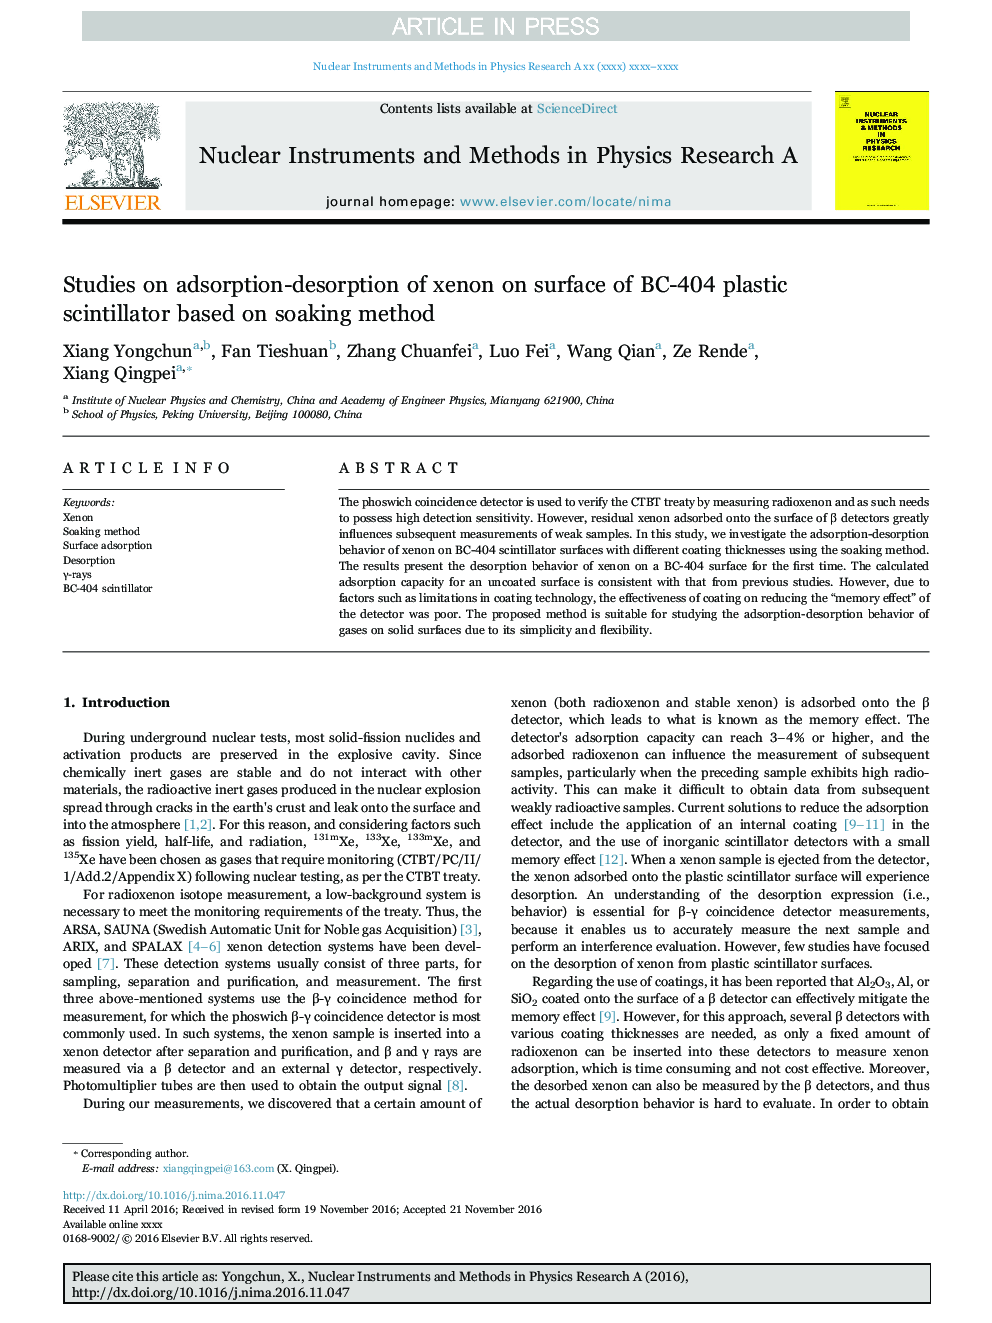 Studies on adsorption-desorption of xenon on surface of BC-404 plastic scintillator based on soaking method